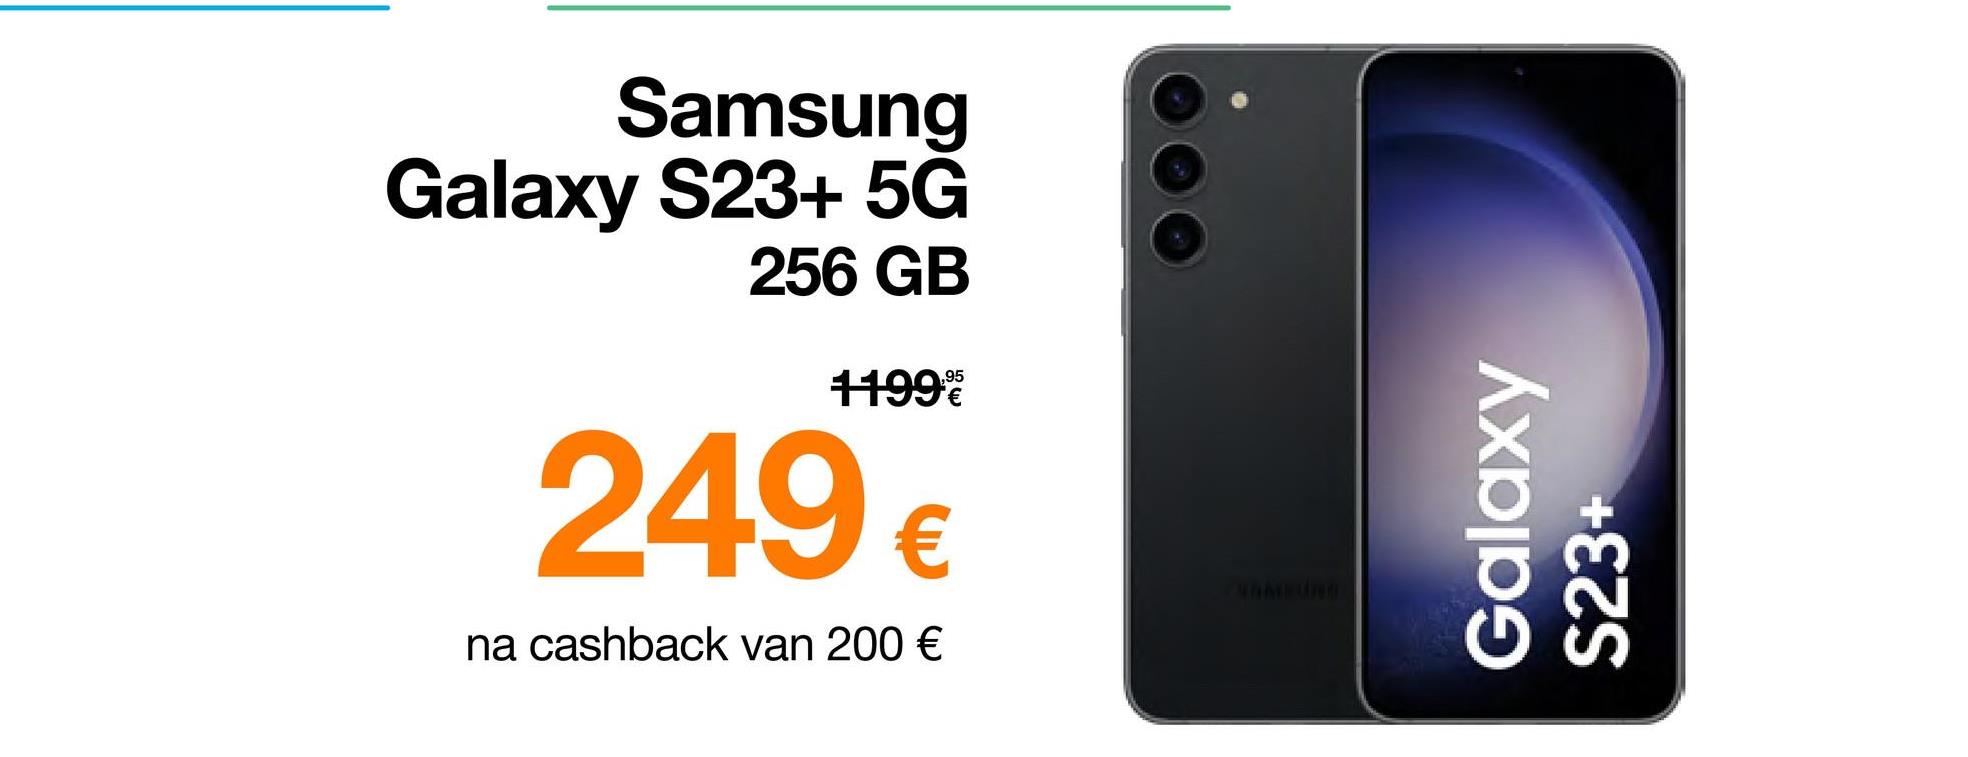 Samsung
Galaxy S23+ 5G
256 GB
11999
249 €
na cashback van 200 €
Galaxy
S23+